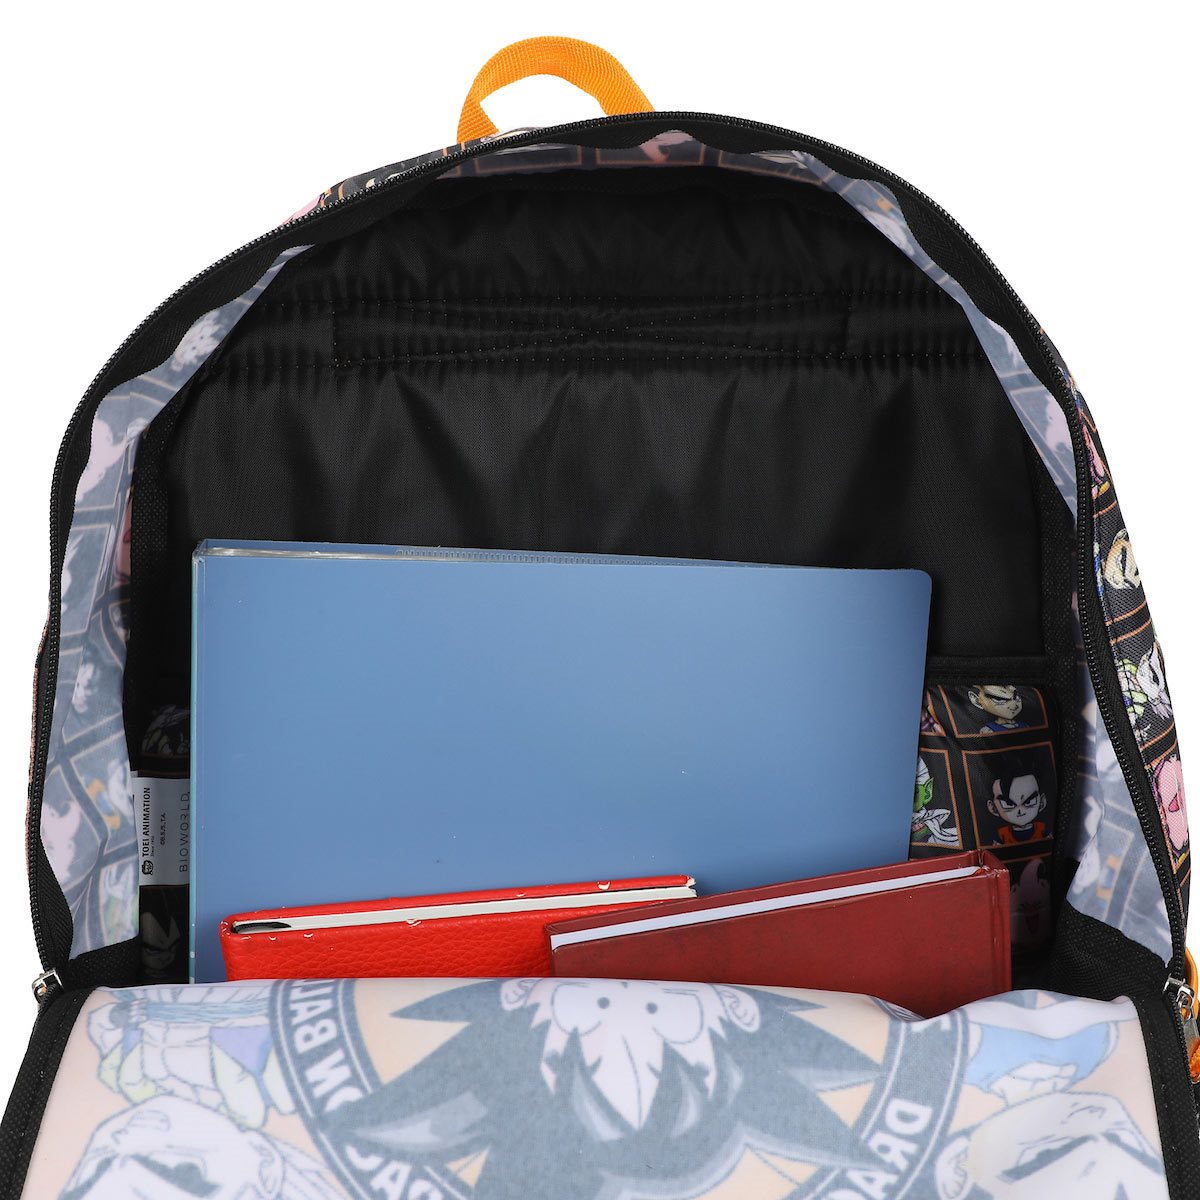 Dragonball Z 5-Piece Backpack Set